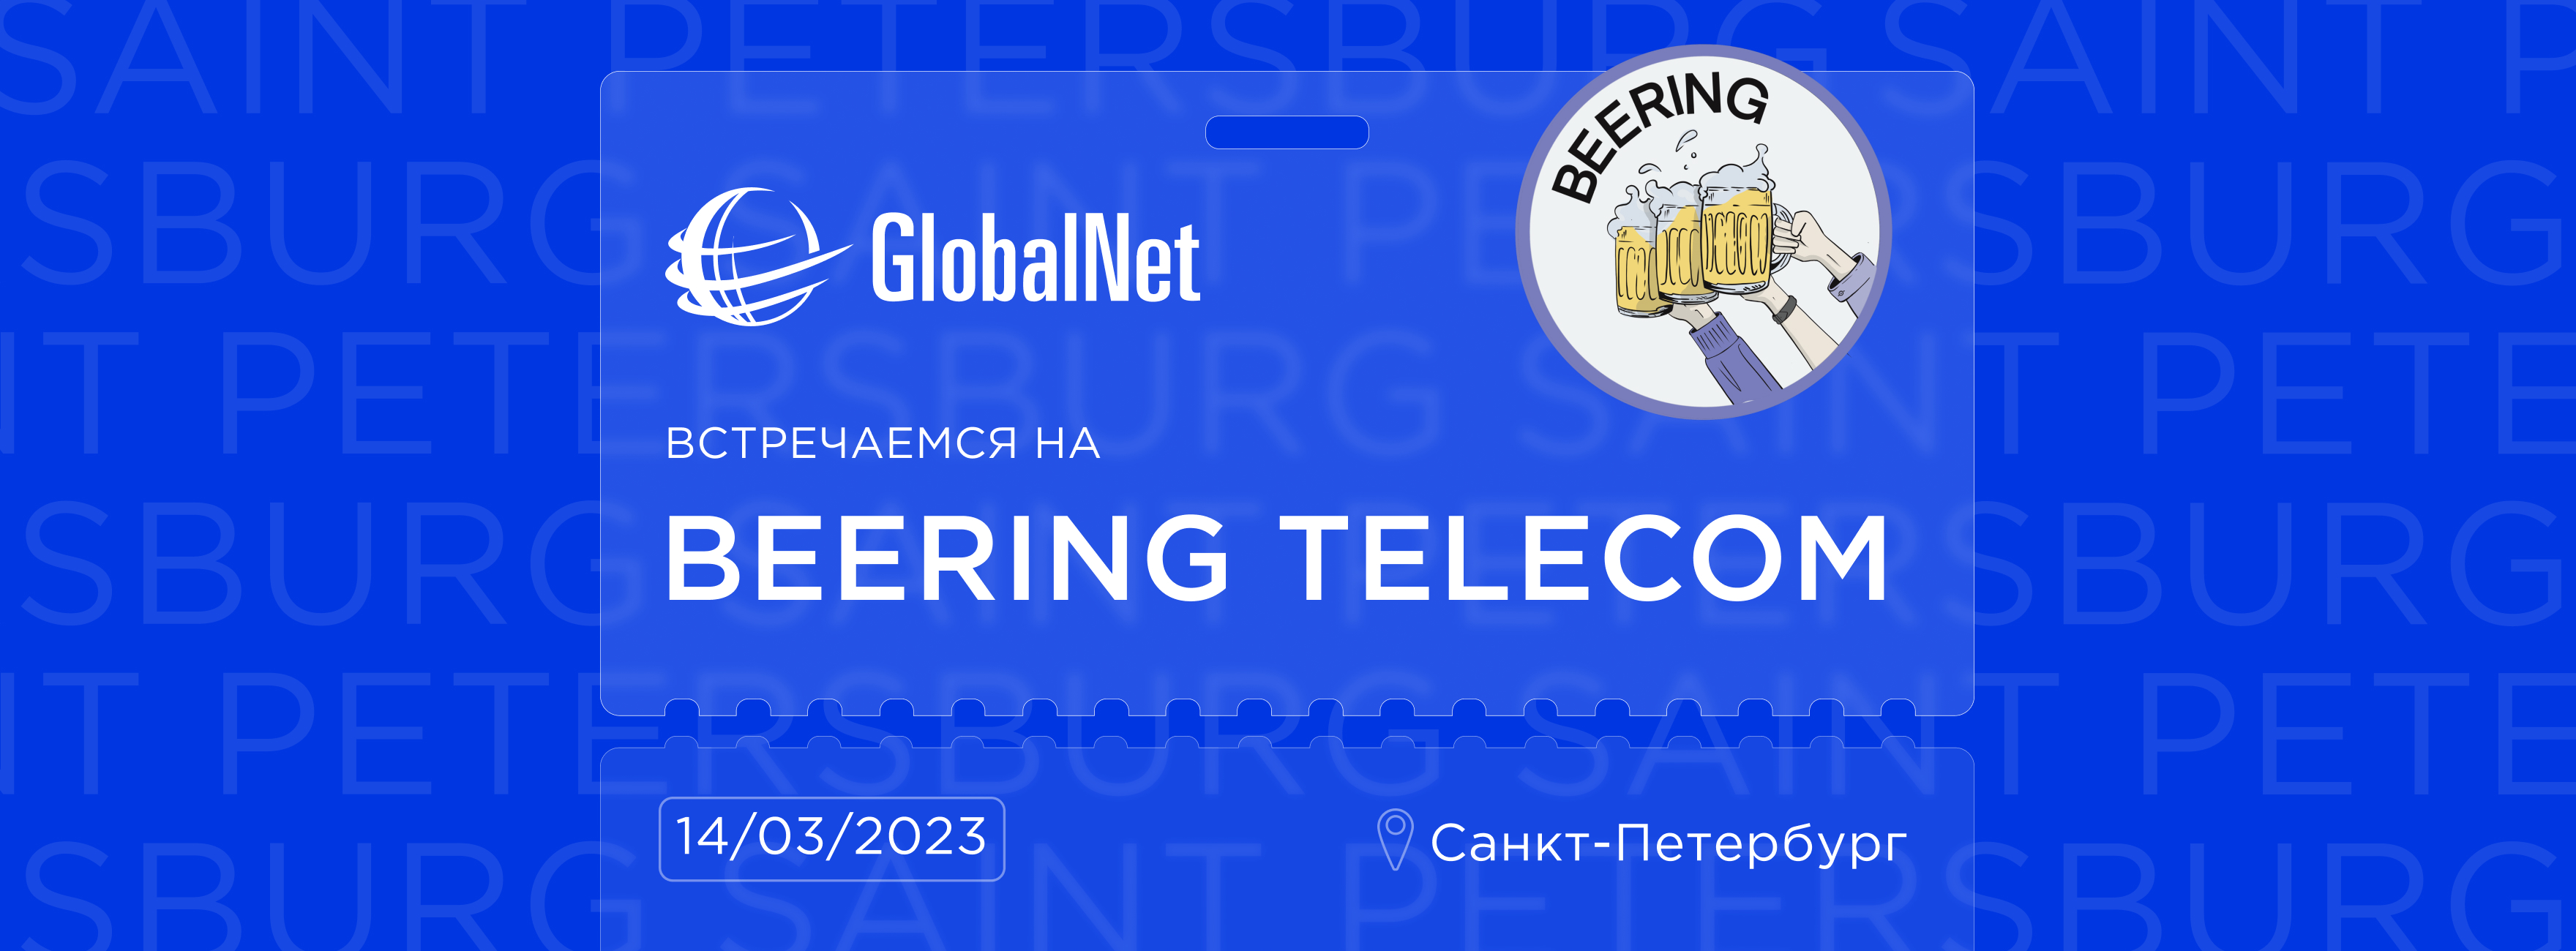 GlobalNet/DATAIX на Beering Telecom